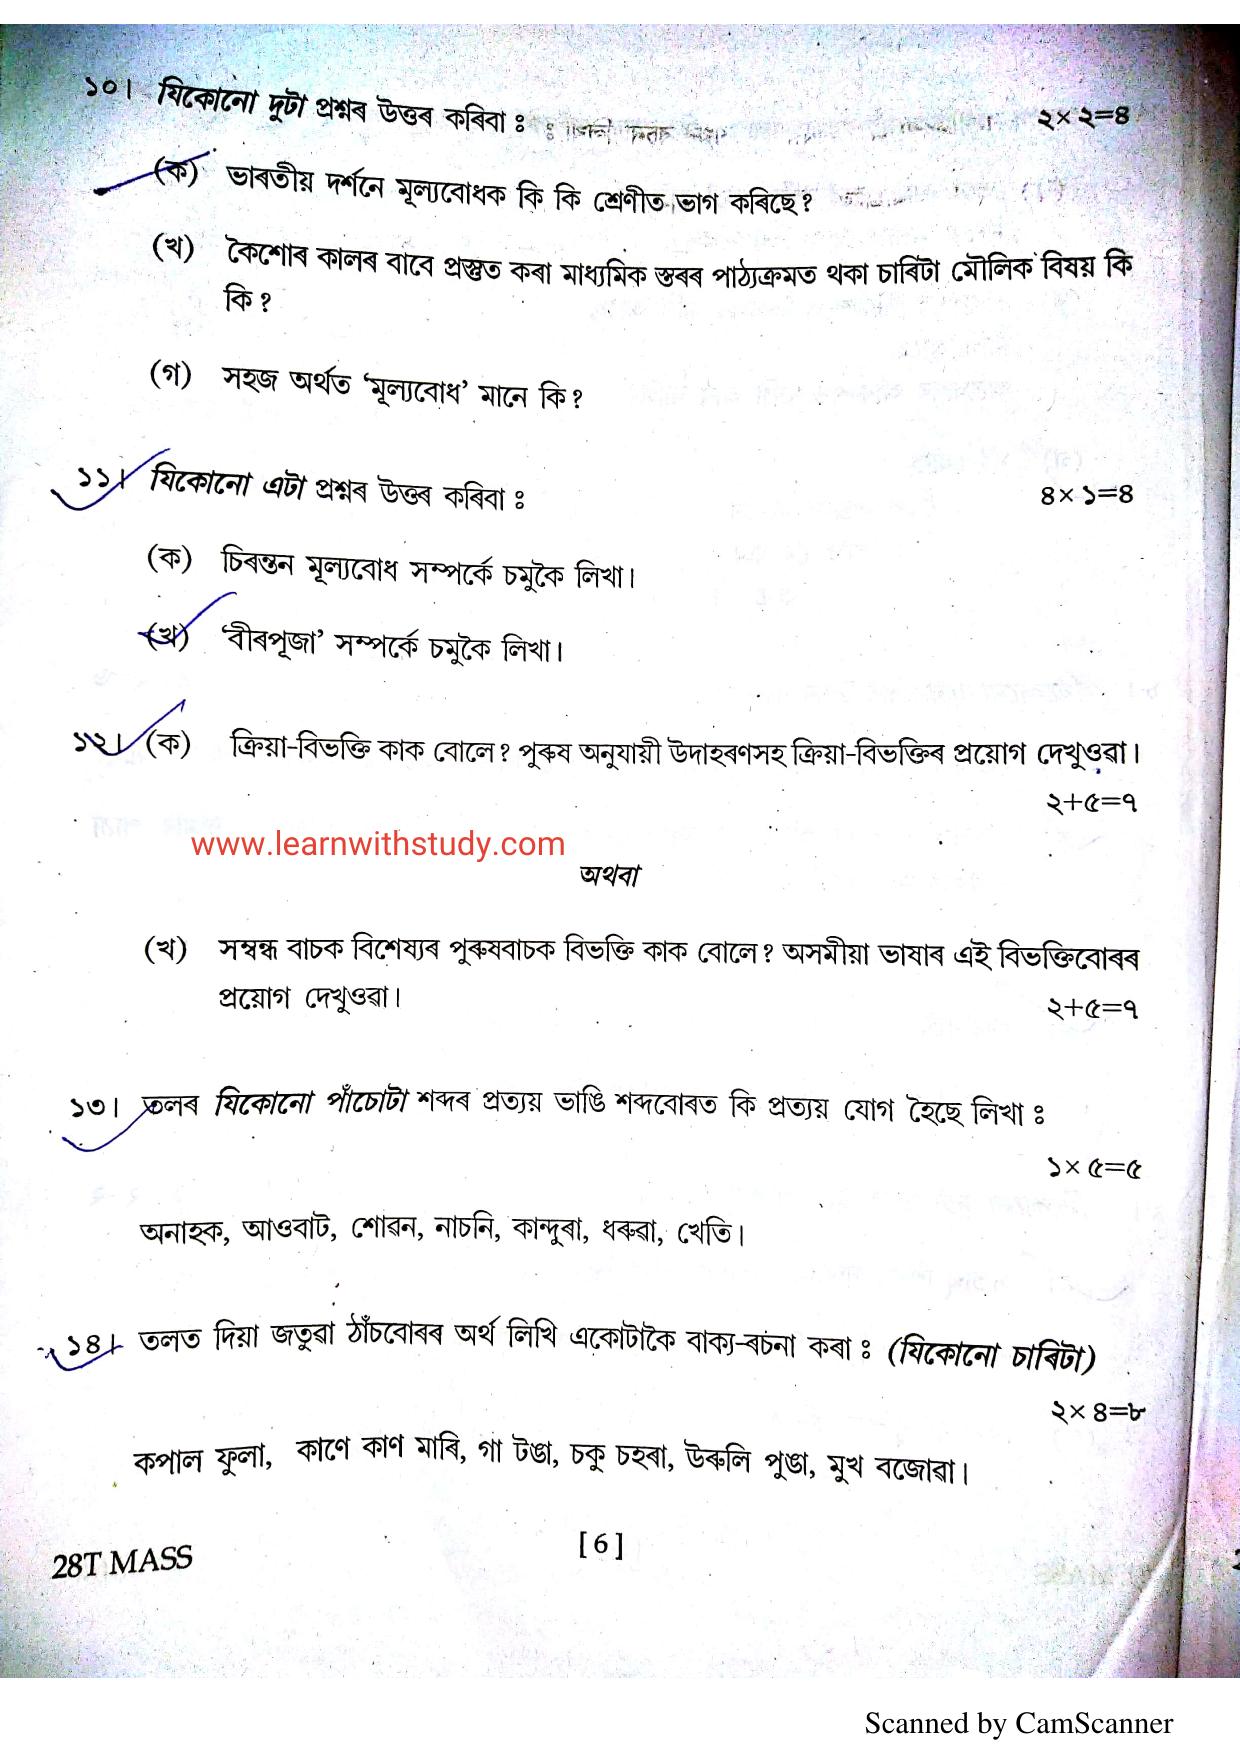 Assam HS 2nd Year Assamese MIL 2018 Question Paper - Page 6